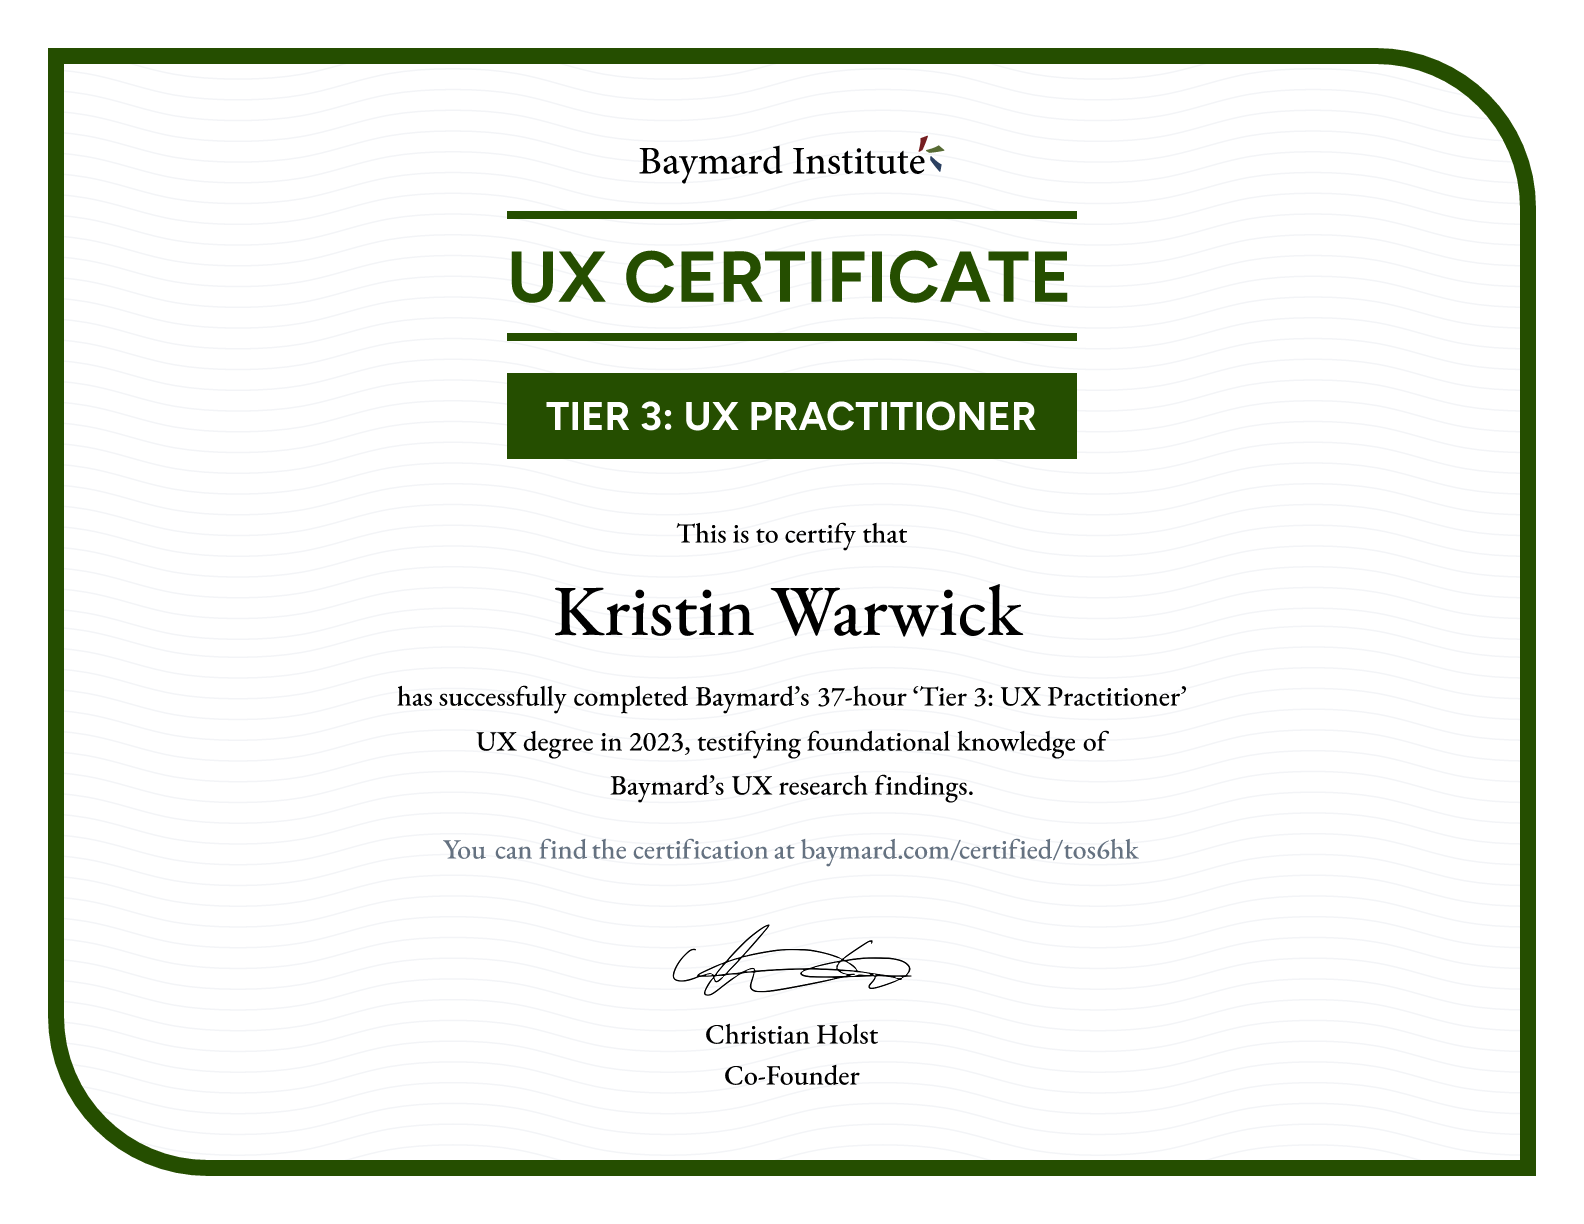 Kristin Warwick’s certificate